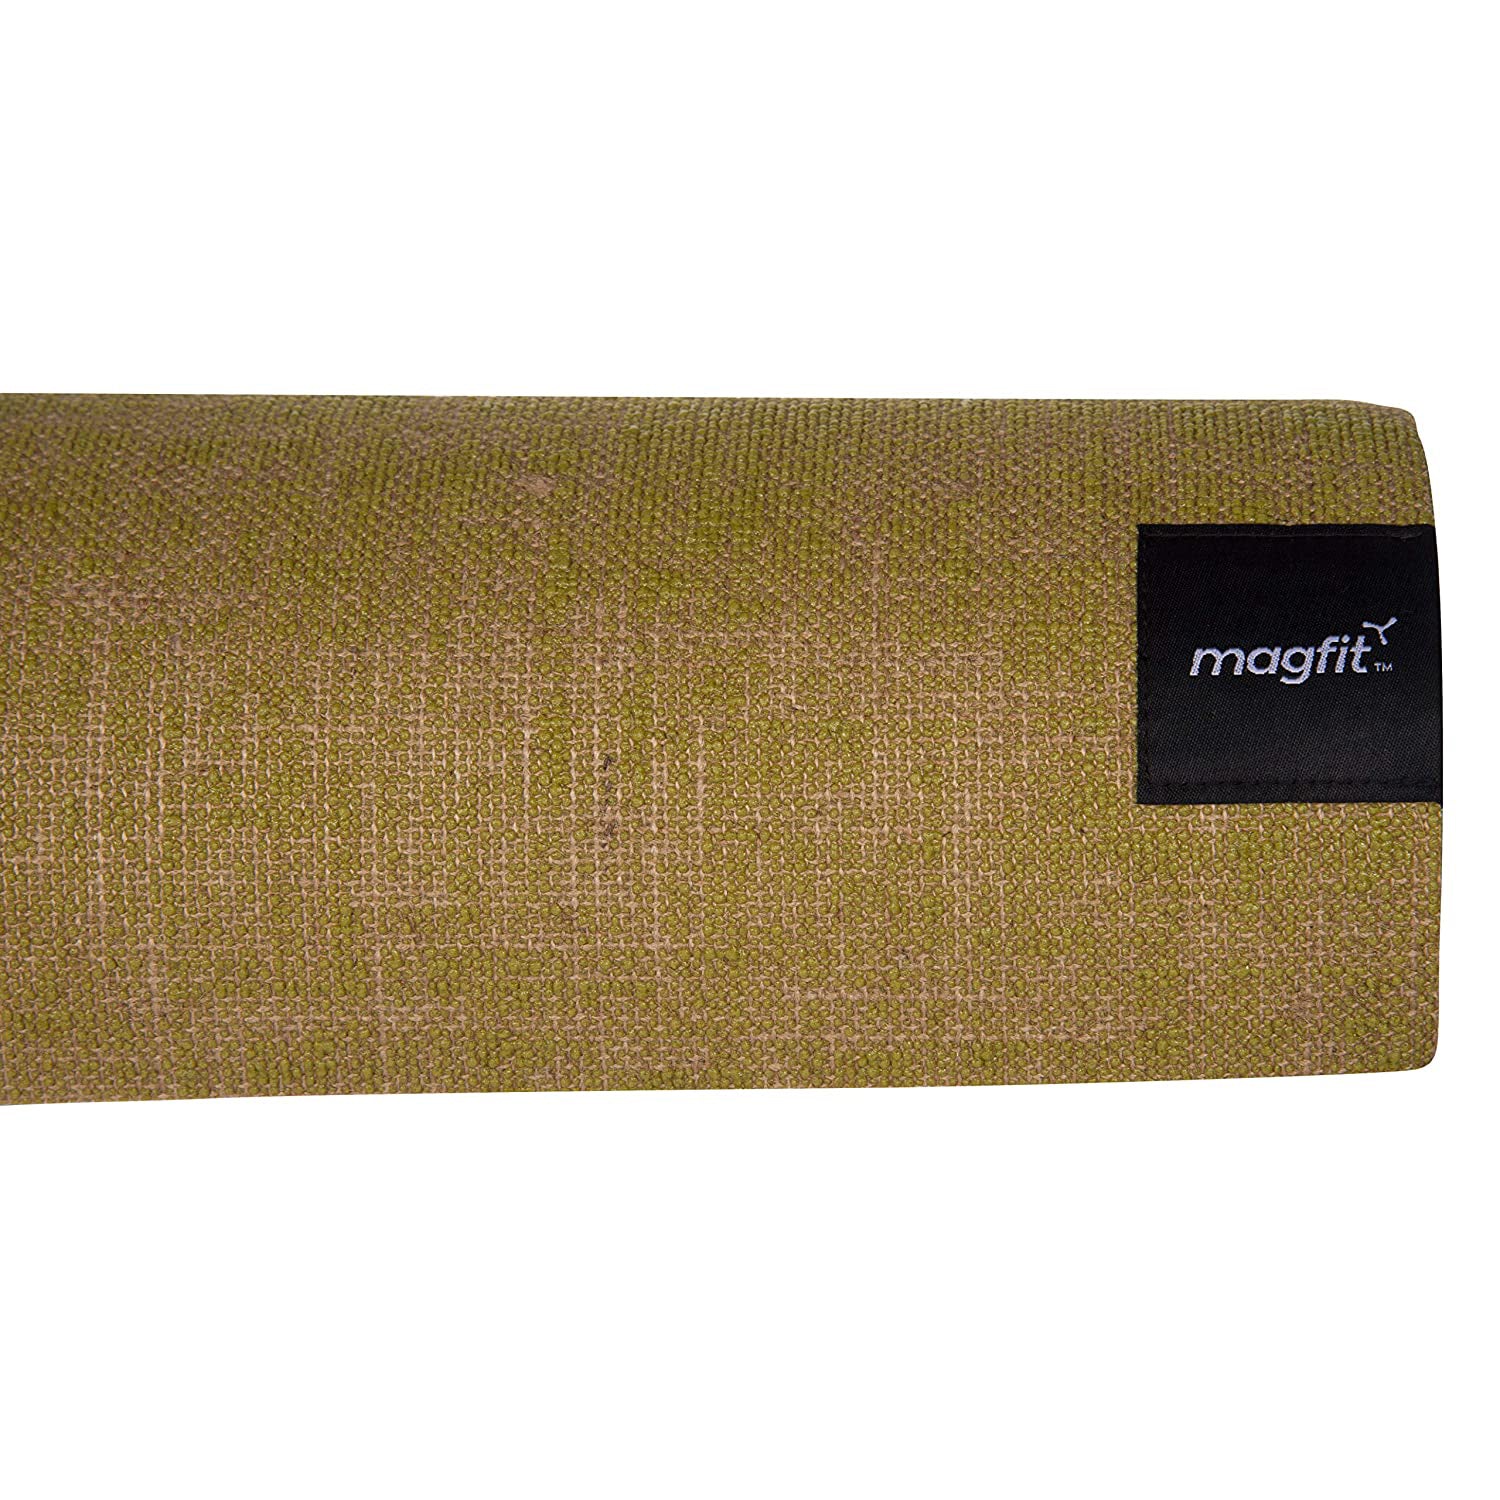 Magfit Premium Jute Yoga MAT (5 mm, Green) - Best Price online Prokicksports.com